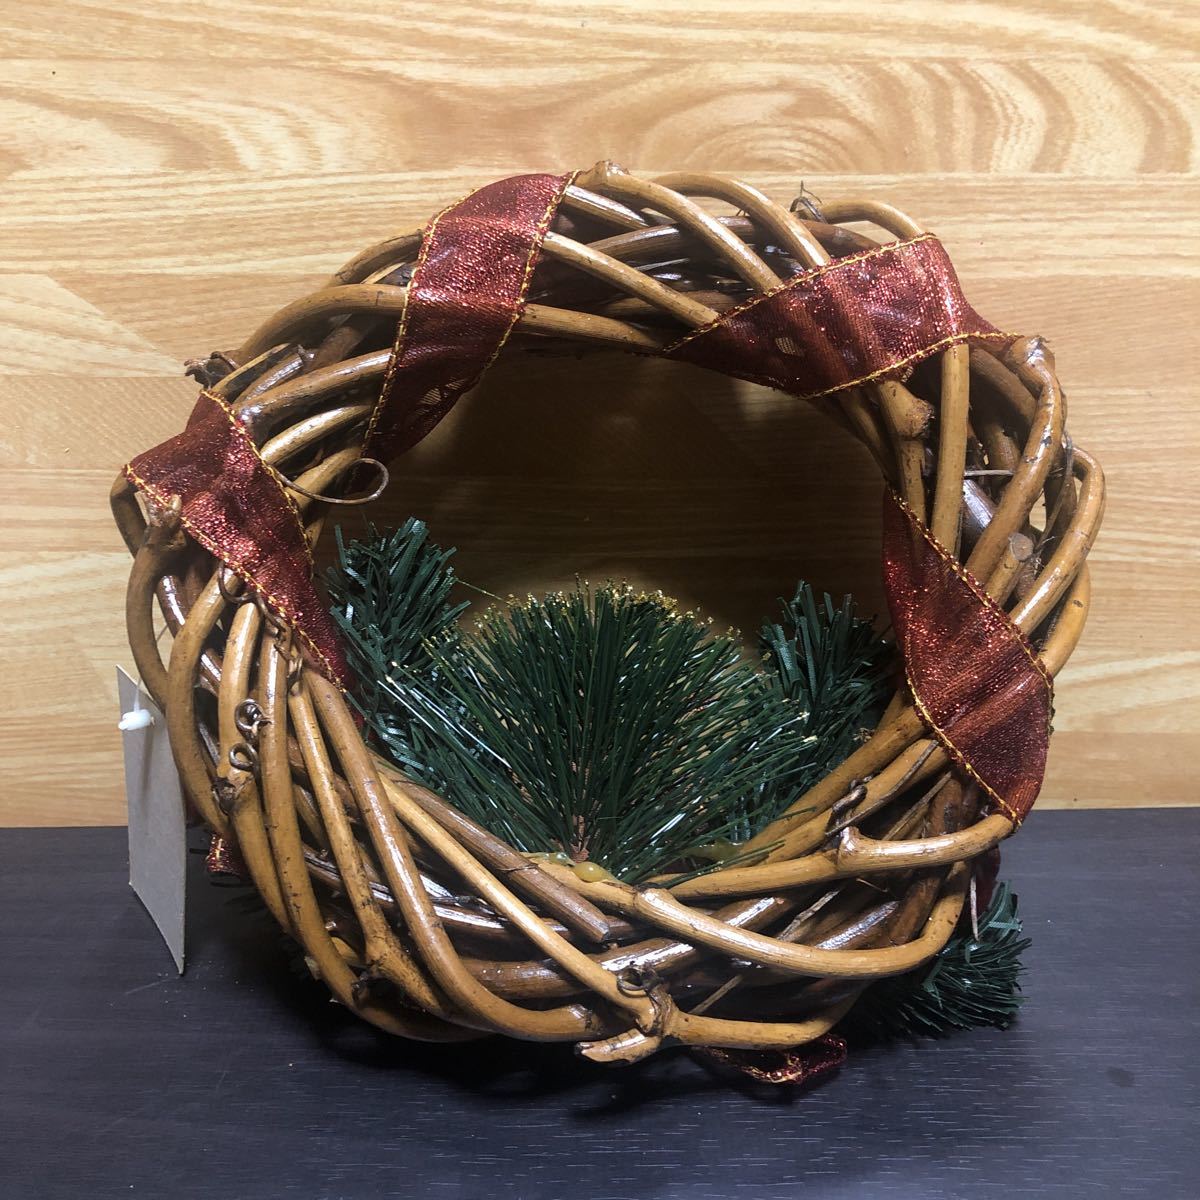  Christmas wreath 8 -inch 